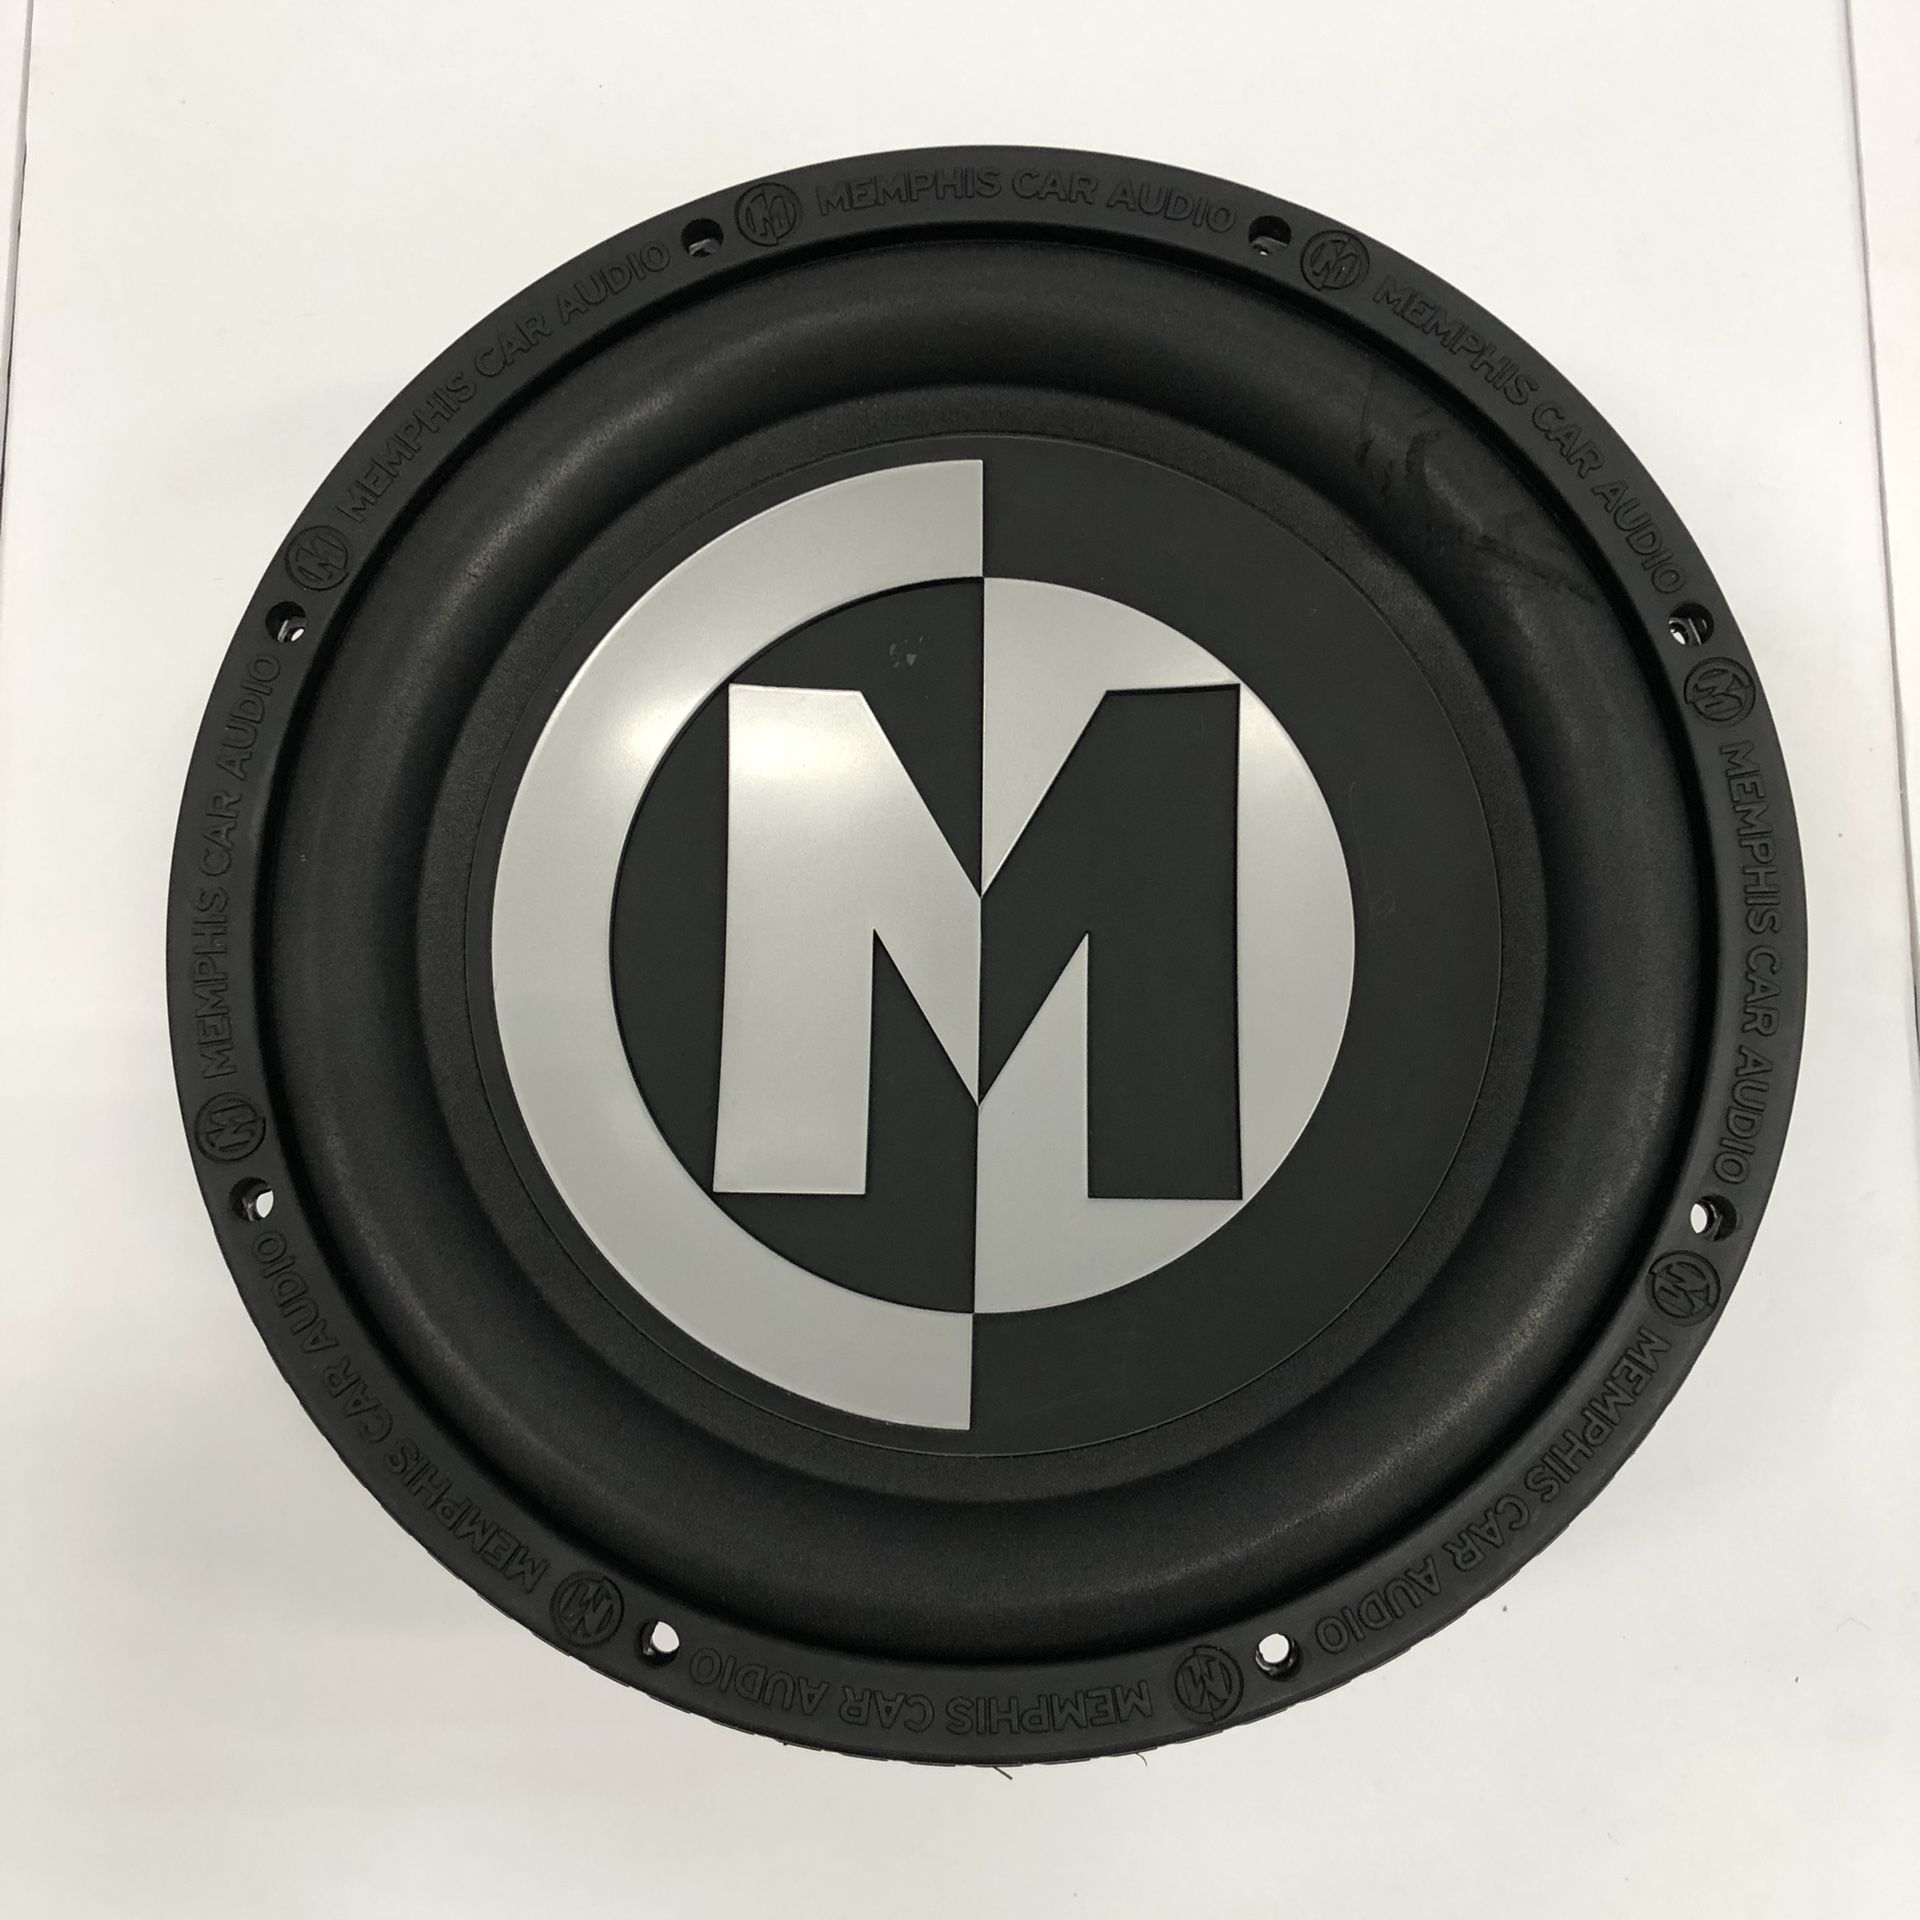 12” Memphis Audio Subwoofer, 500 watts